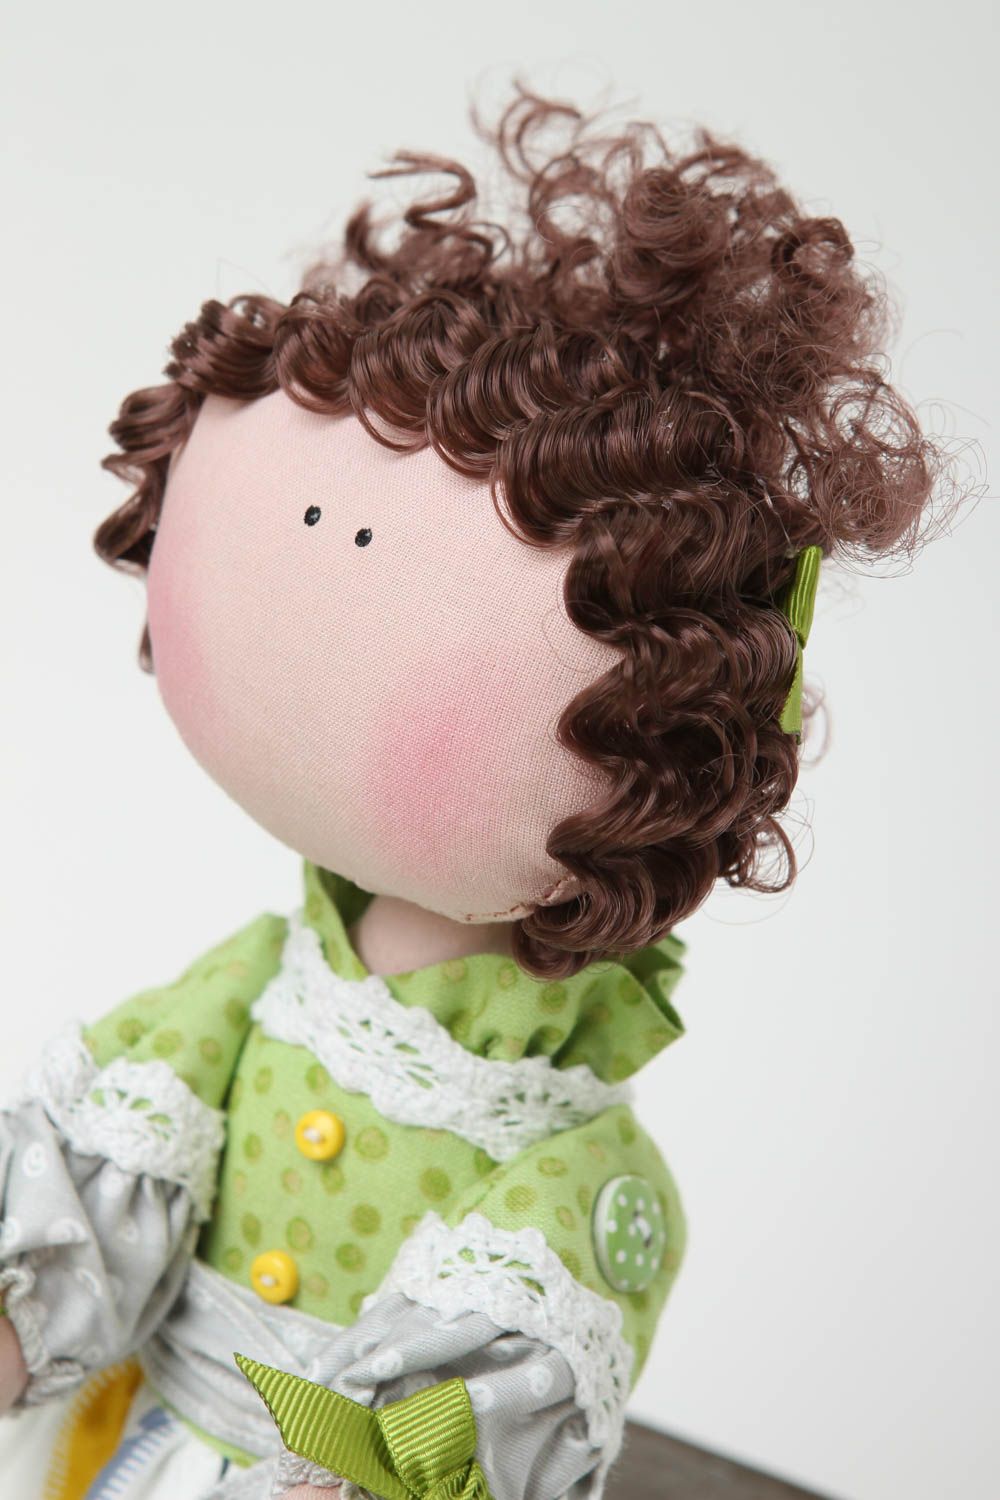 Beautiful handmadr rag doll decorative soft toy gift ideas decorative use only photo 3